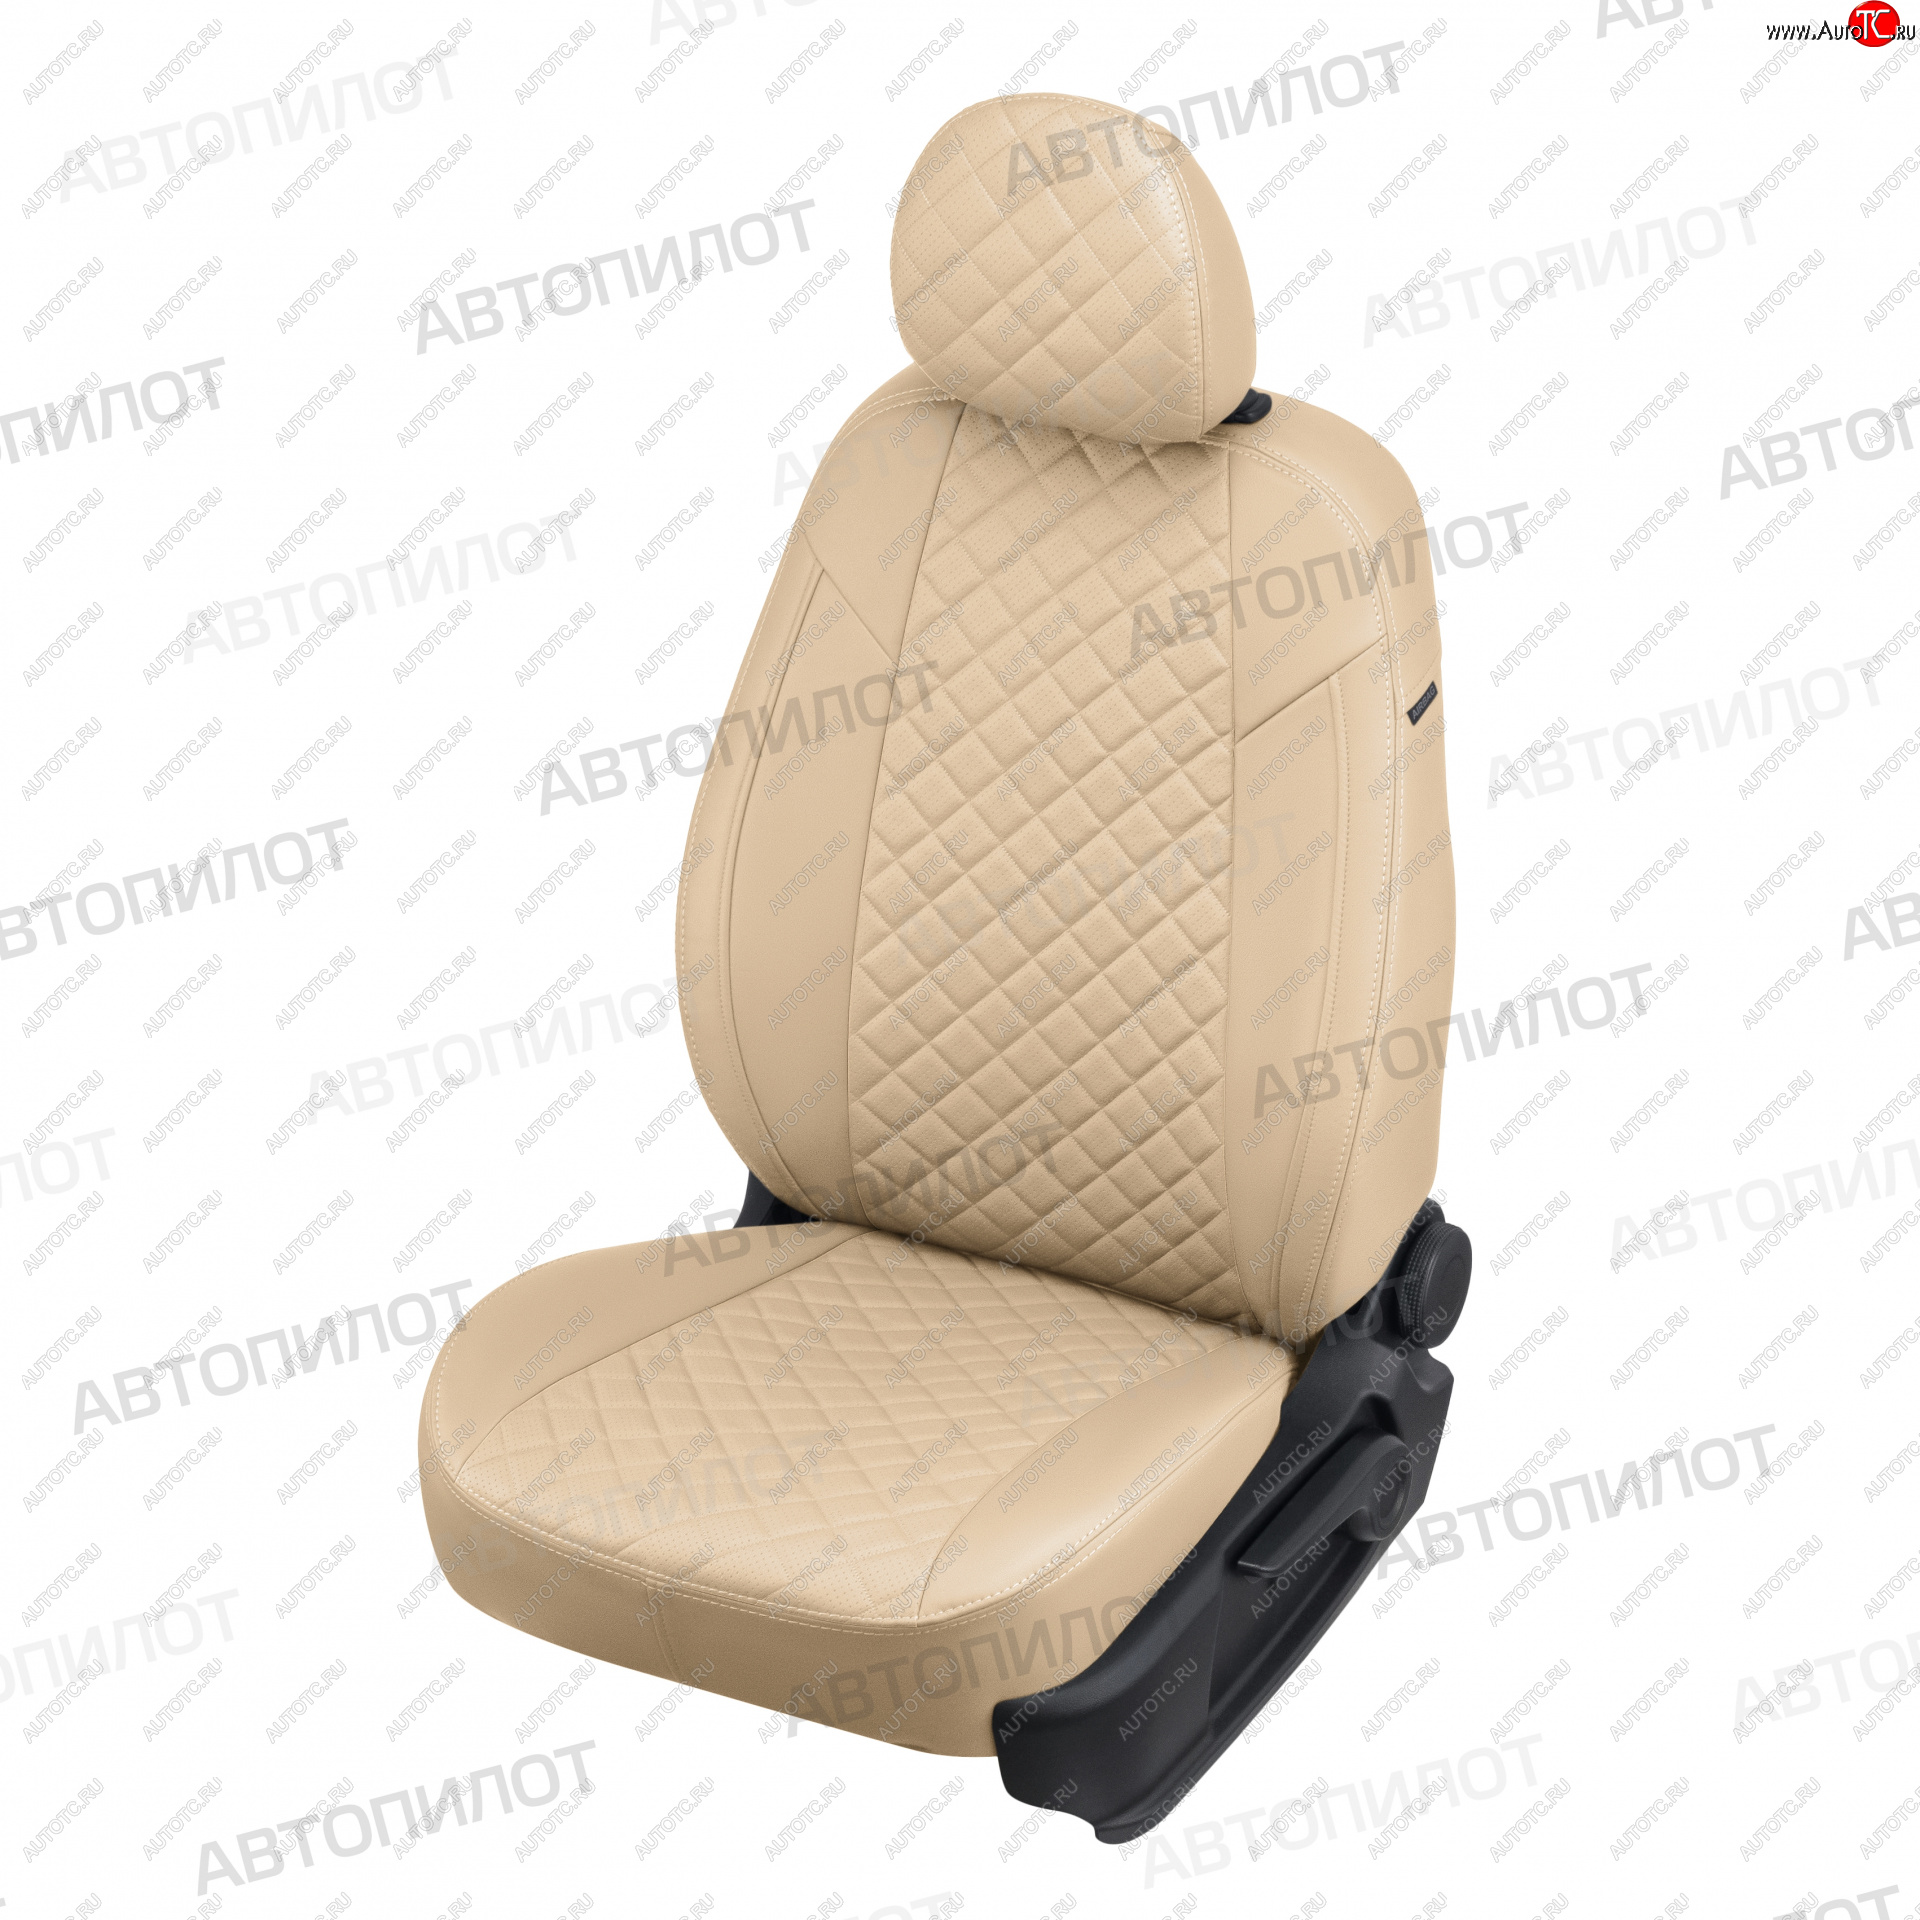 13 999 р. Чехлы сидений (экокожа) Автопилот Ромб  KIA Picanto  1 SA хэтчбэк 5 дв. (2003-2011) (бежевый)